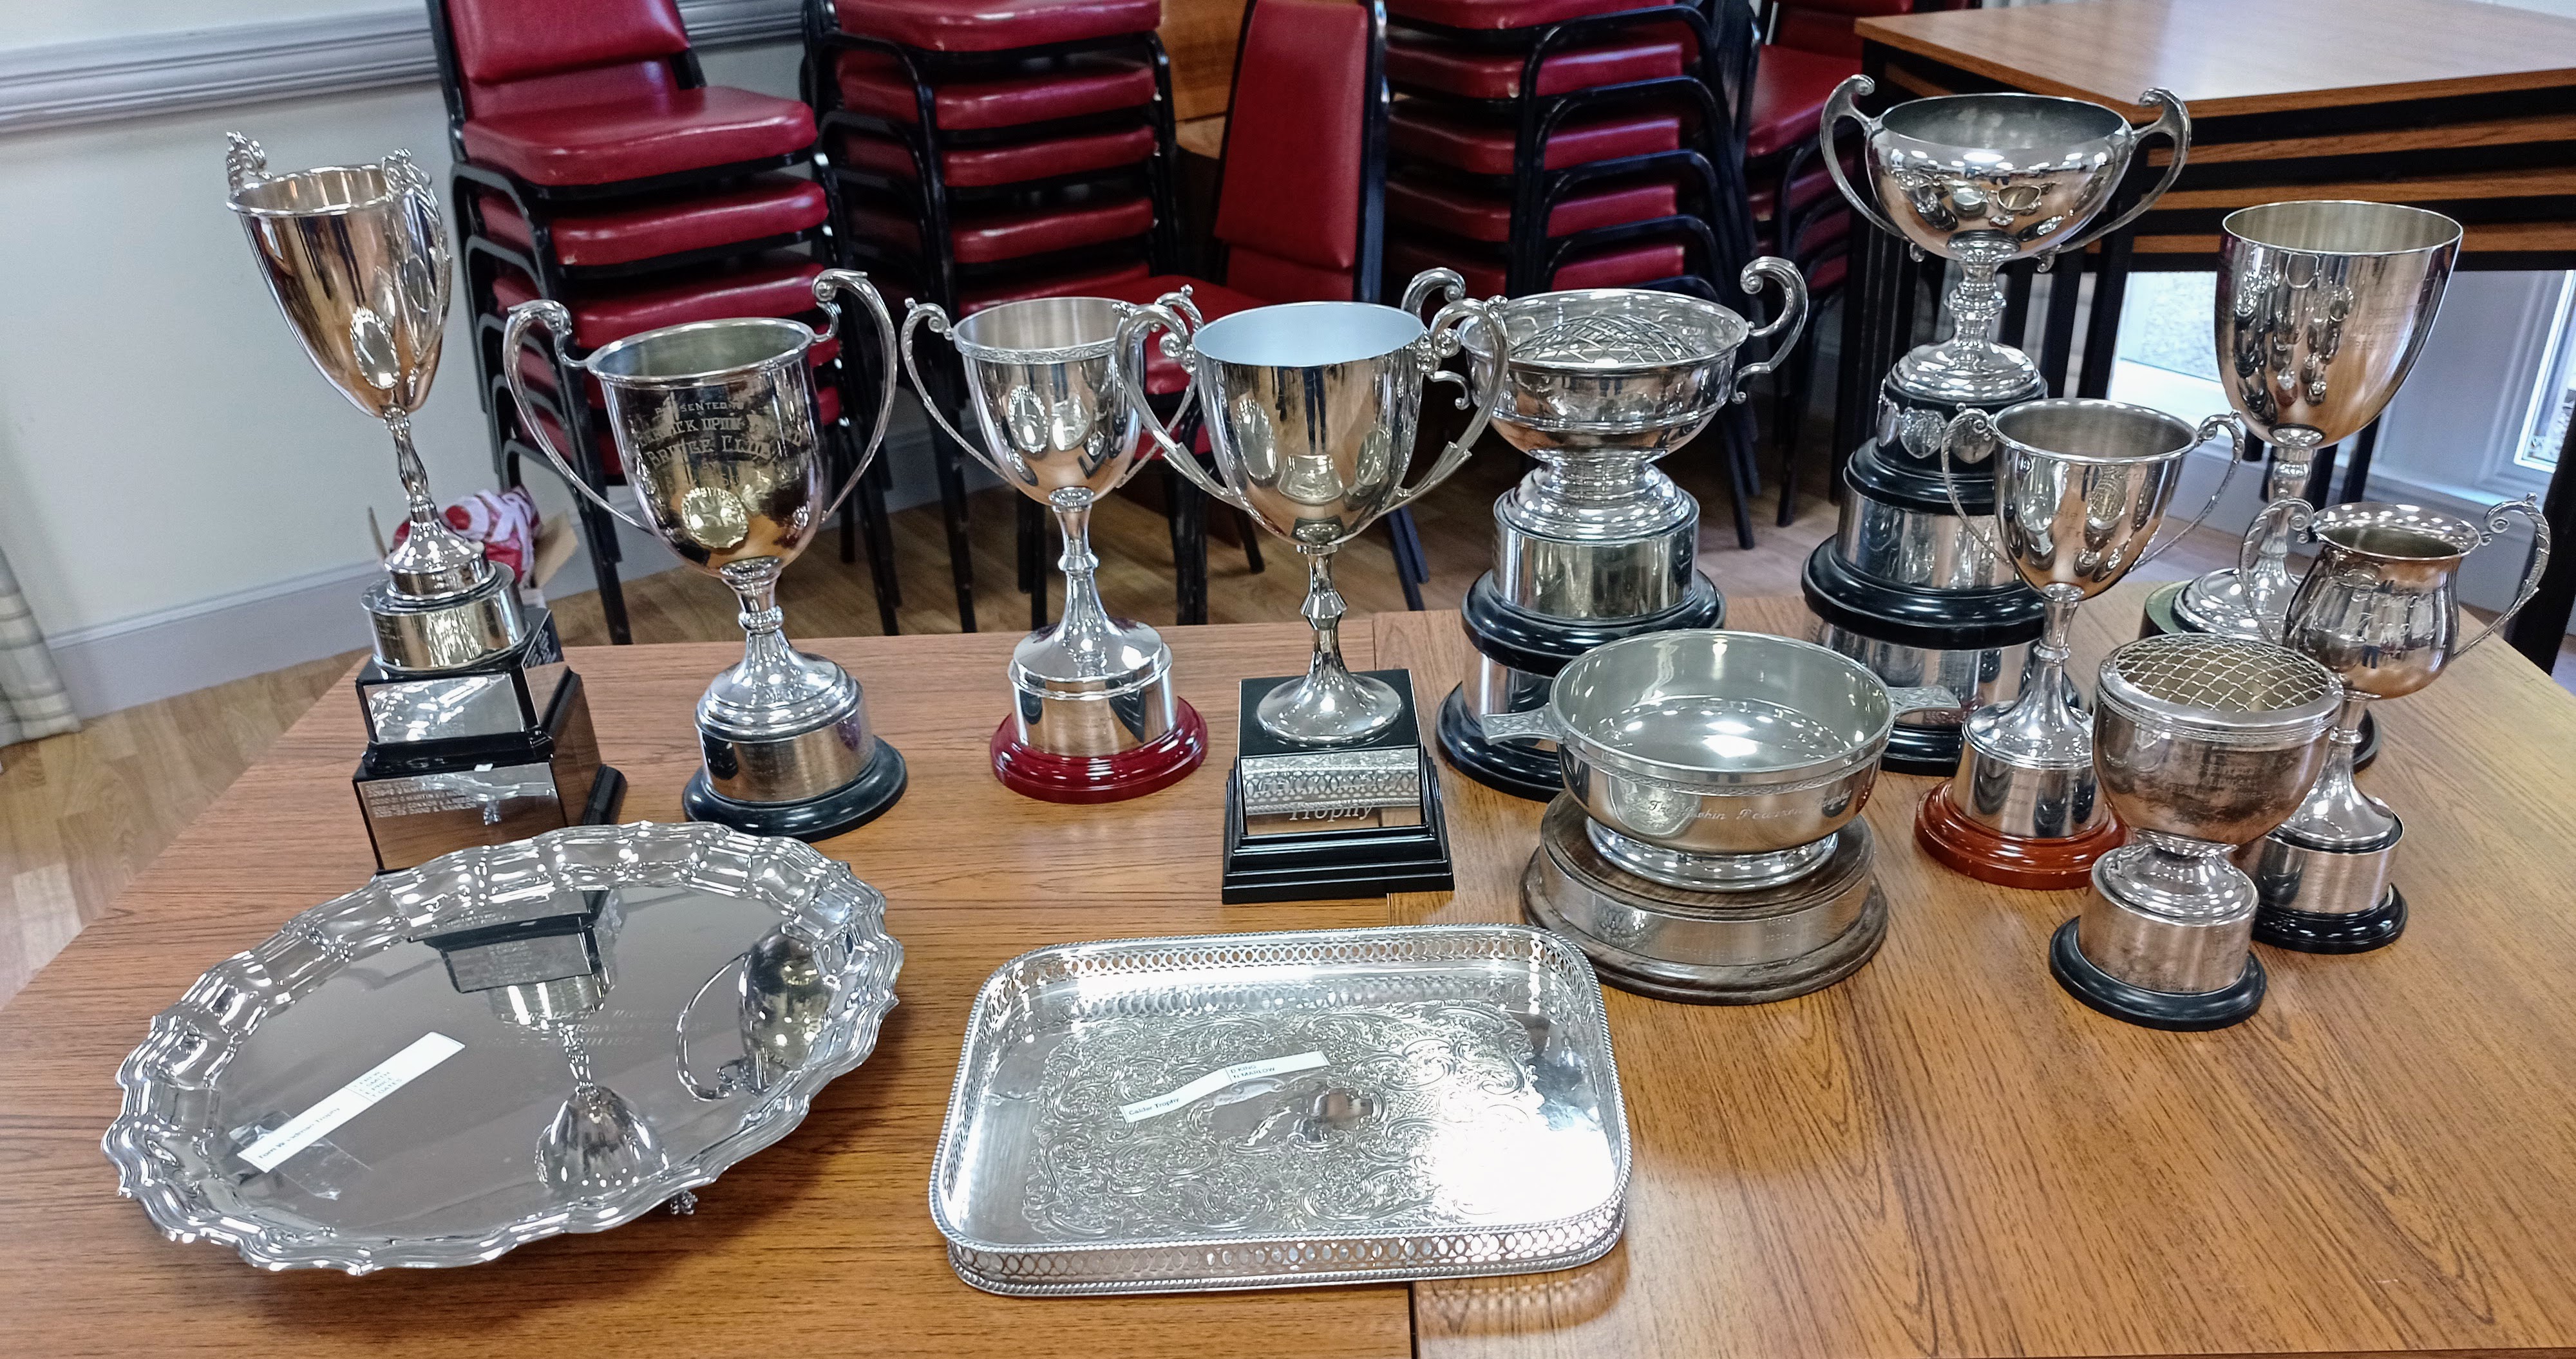 Berwick Bridge Club's thirteen trophies